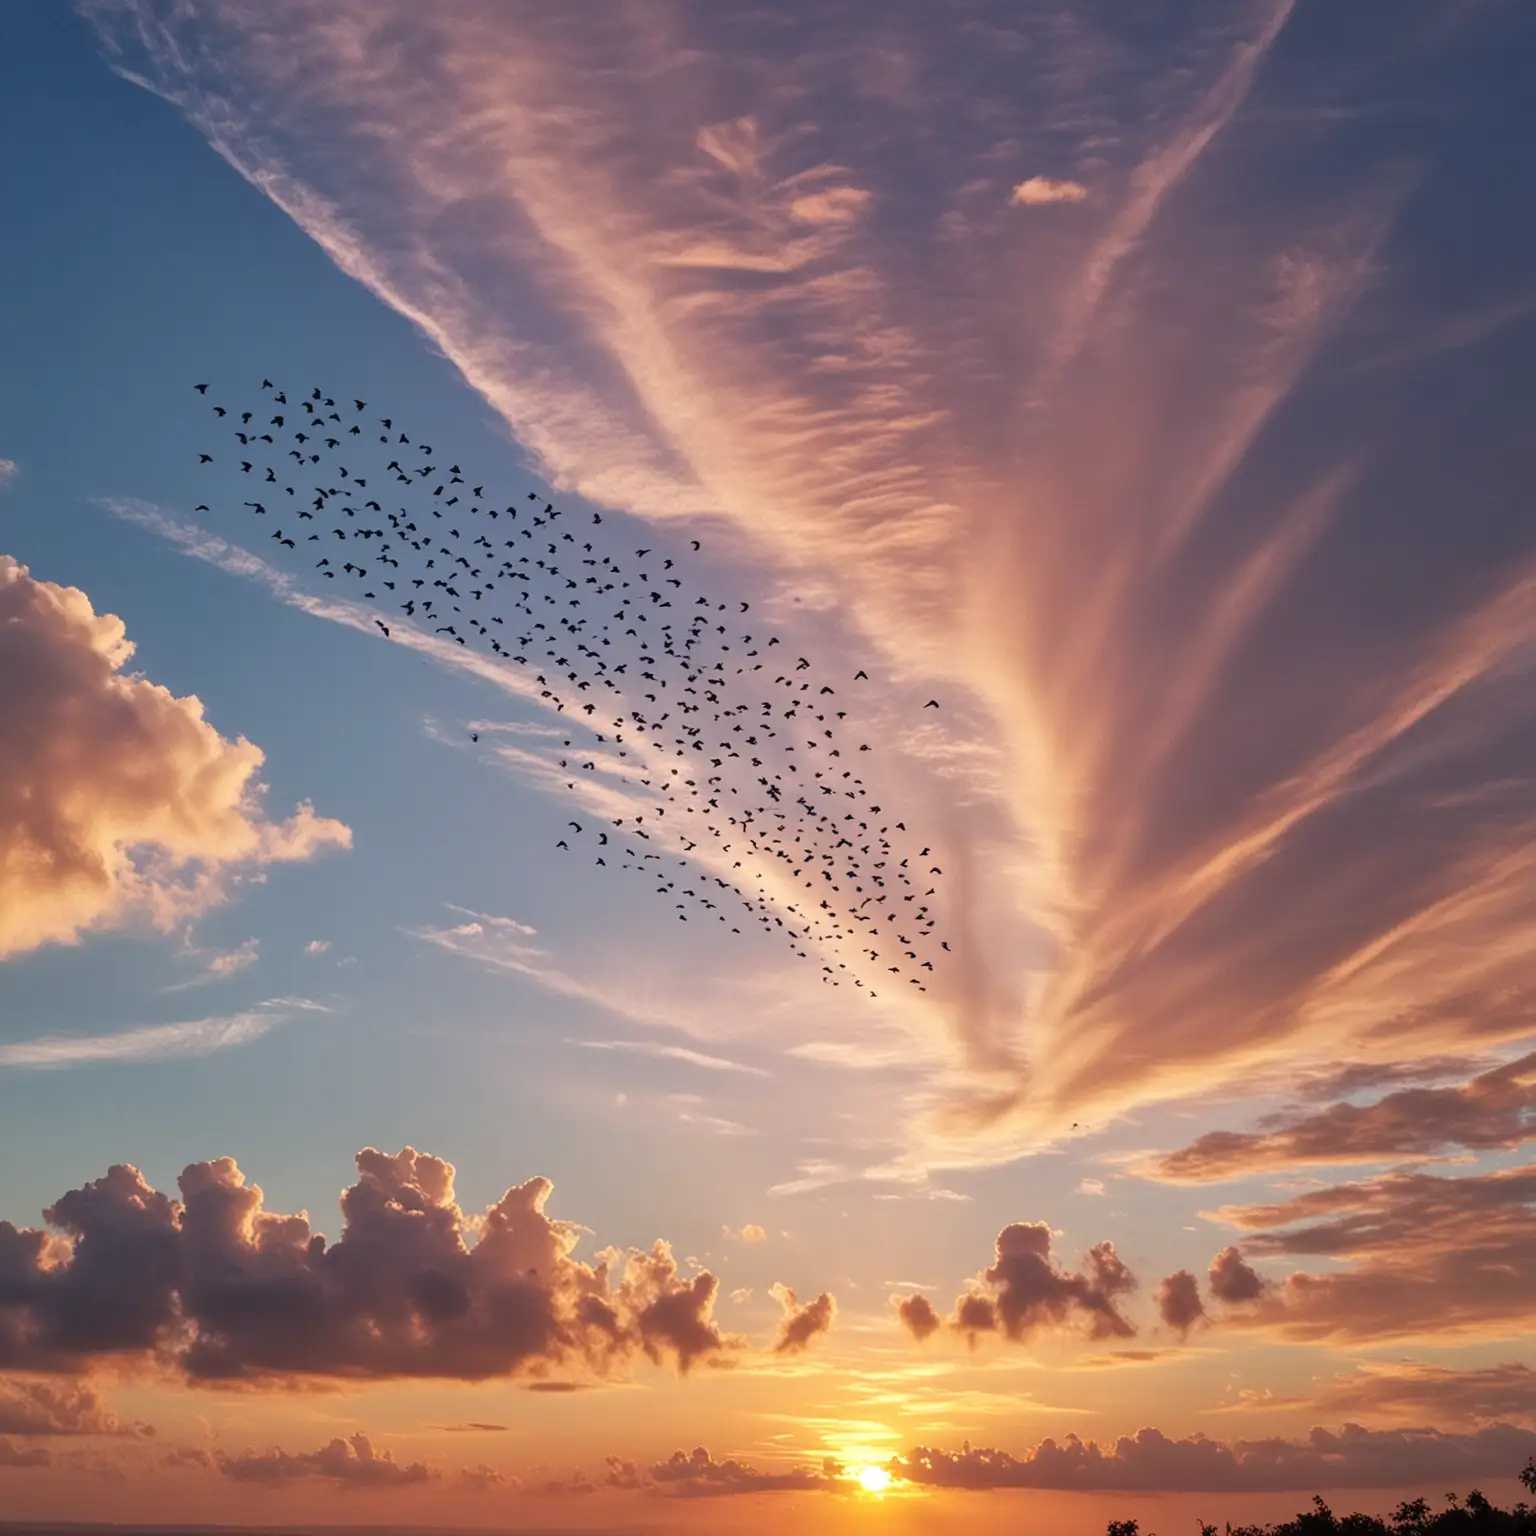 Divine Creation of Avian Life